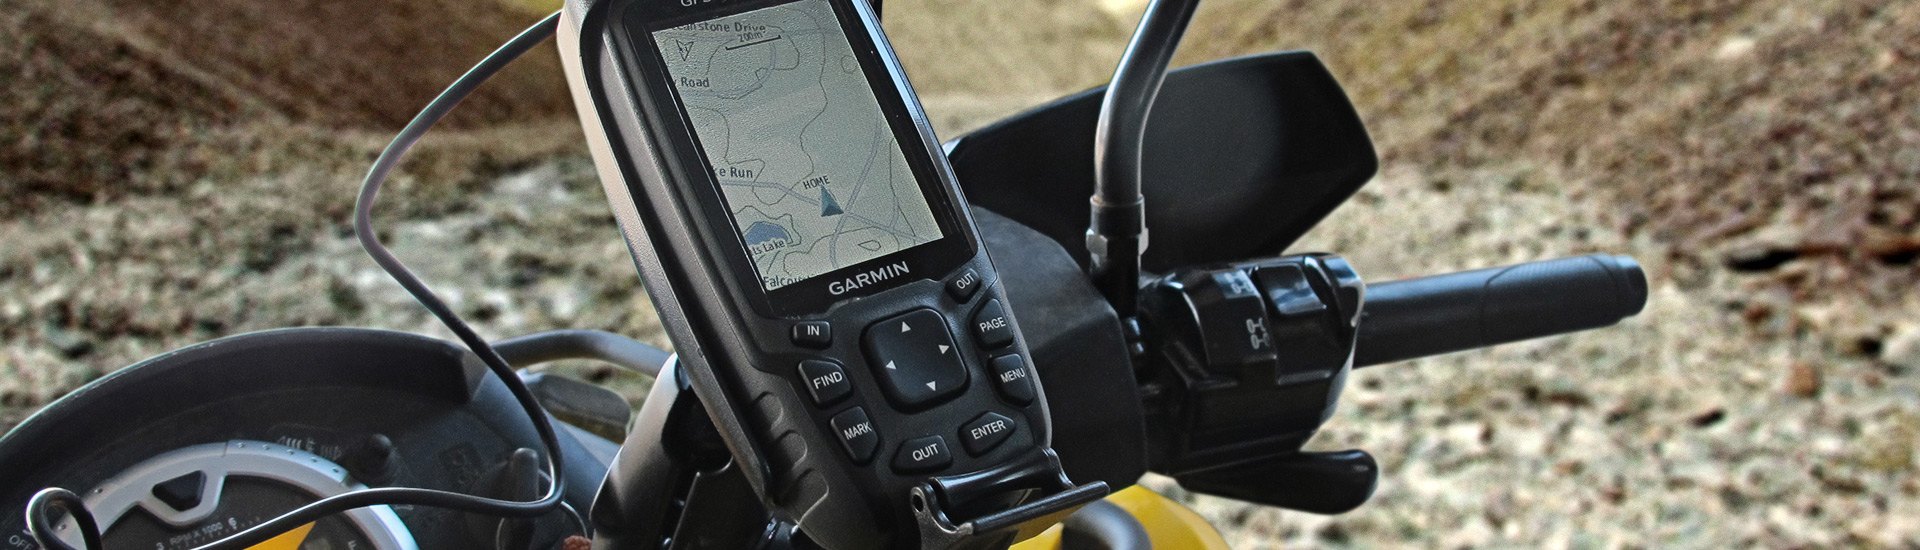 Powersports GPS & Navigation